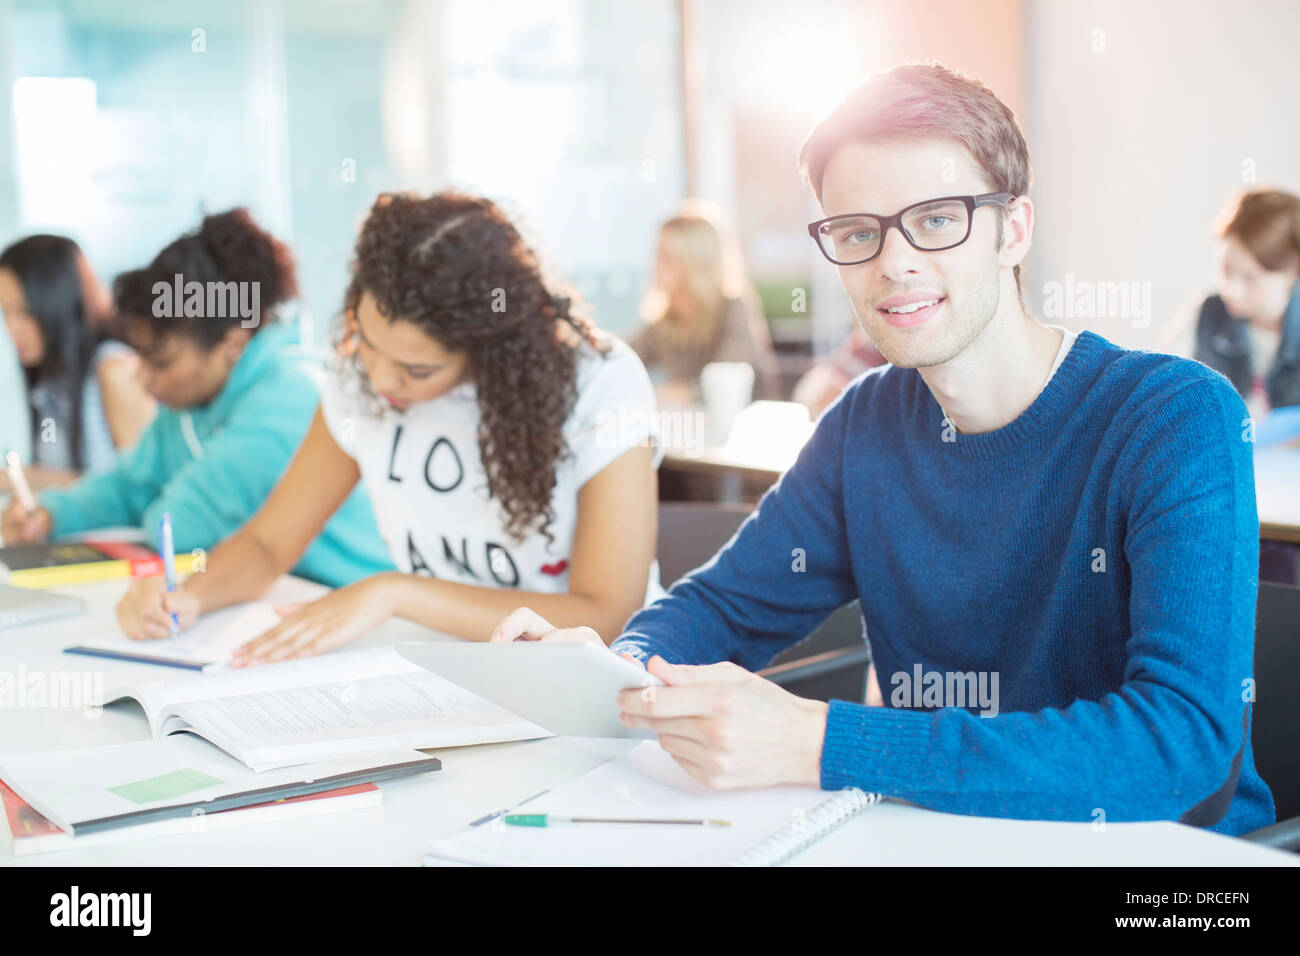 University student using digital tablet in classroom Stock Photo